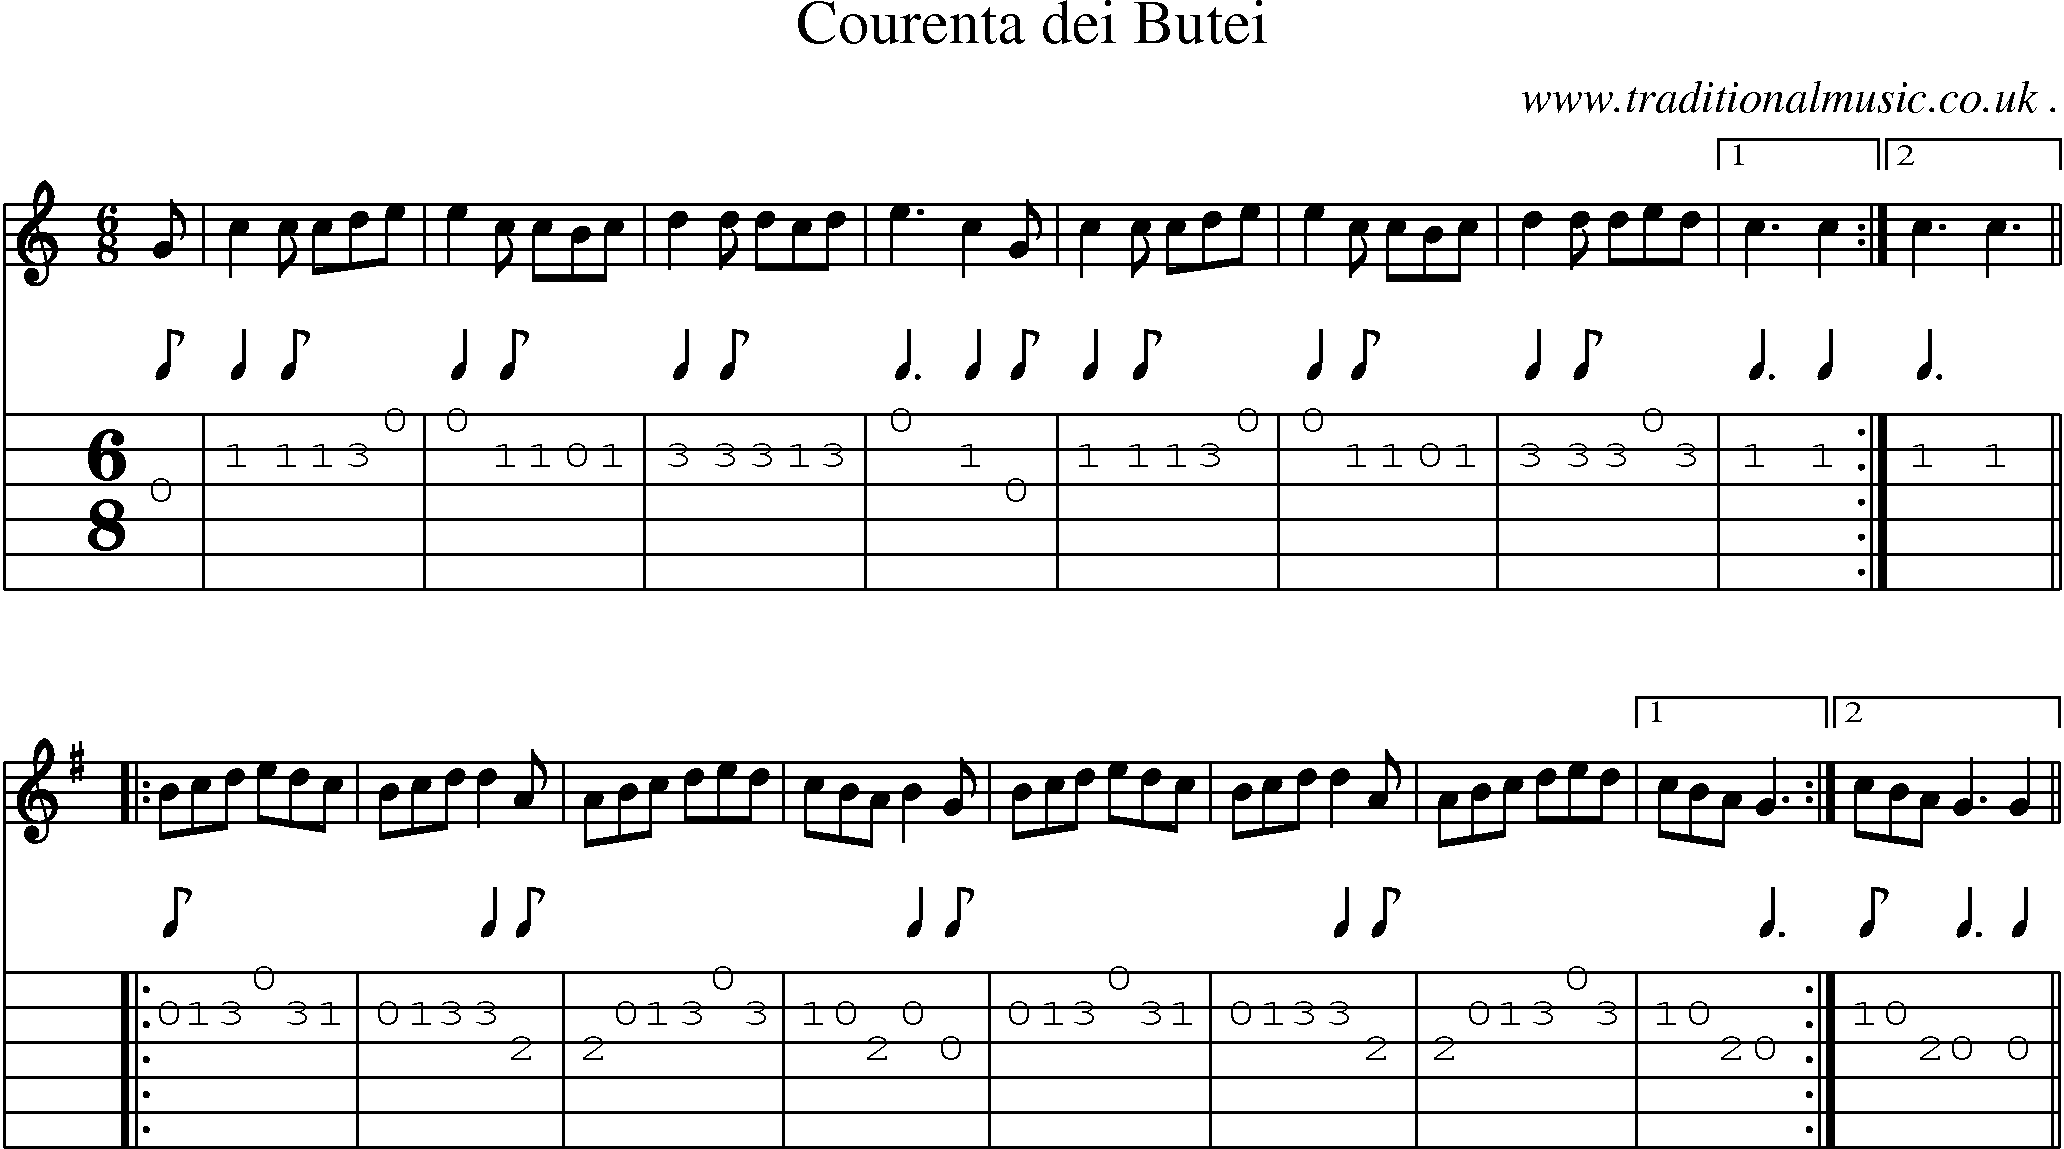 Sheet-Music and Guitar Tabs for Courenta Dei Butei